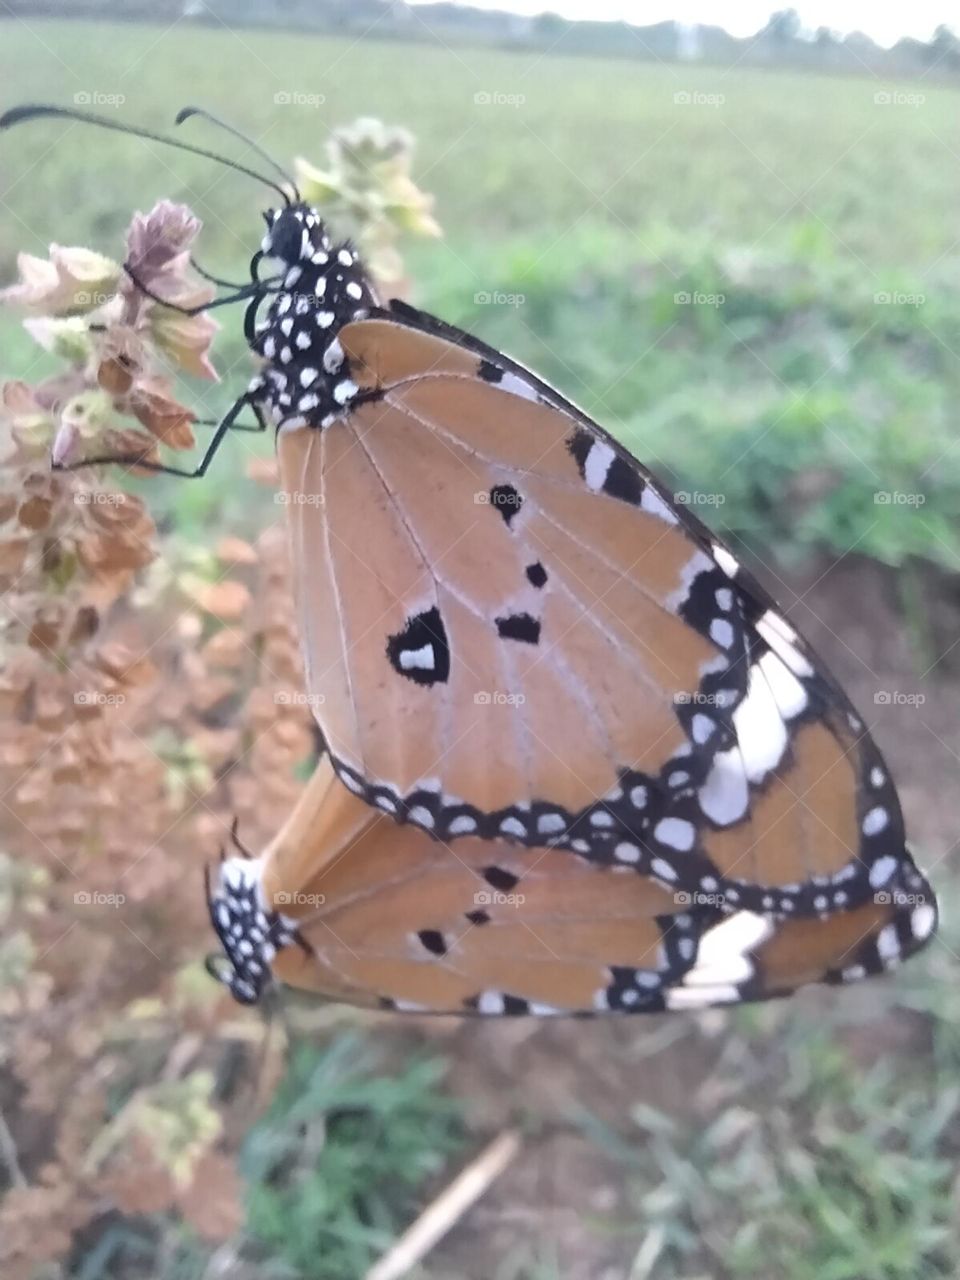 s*x of butterflys